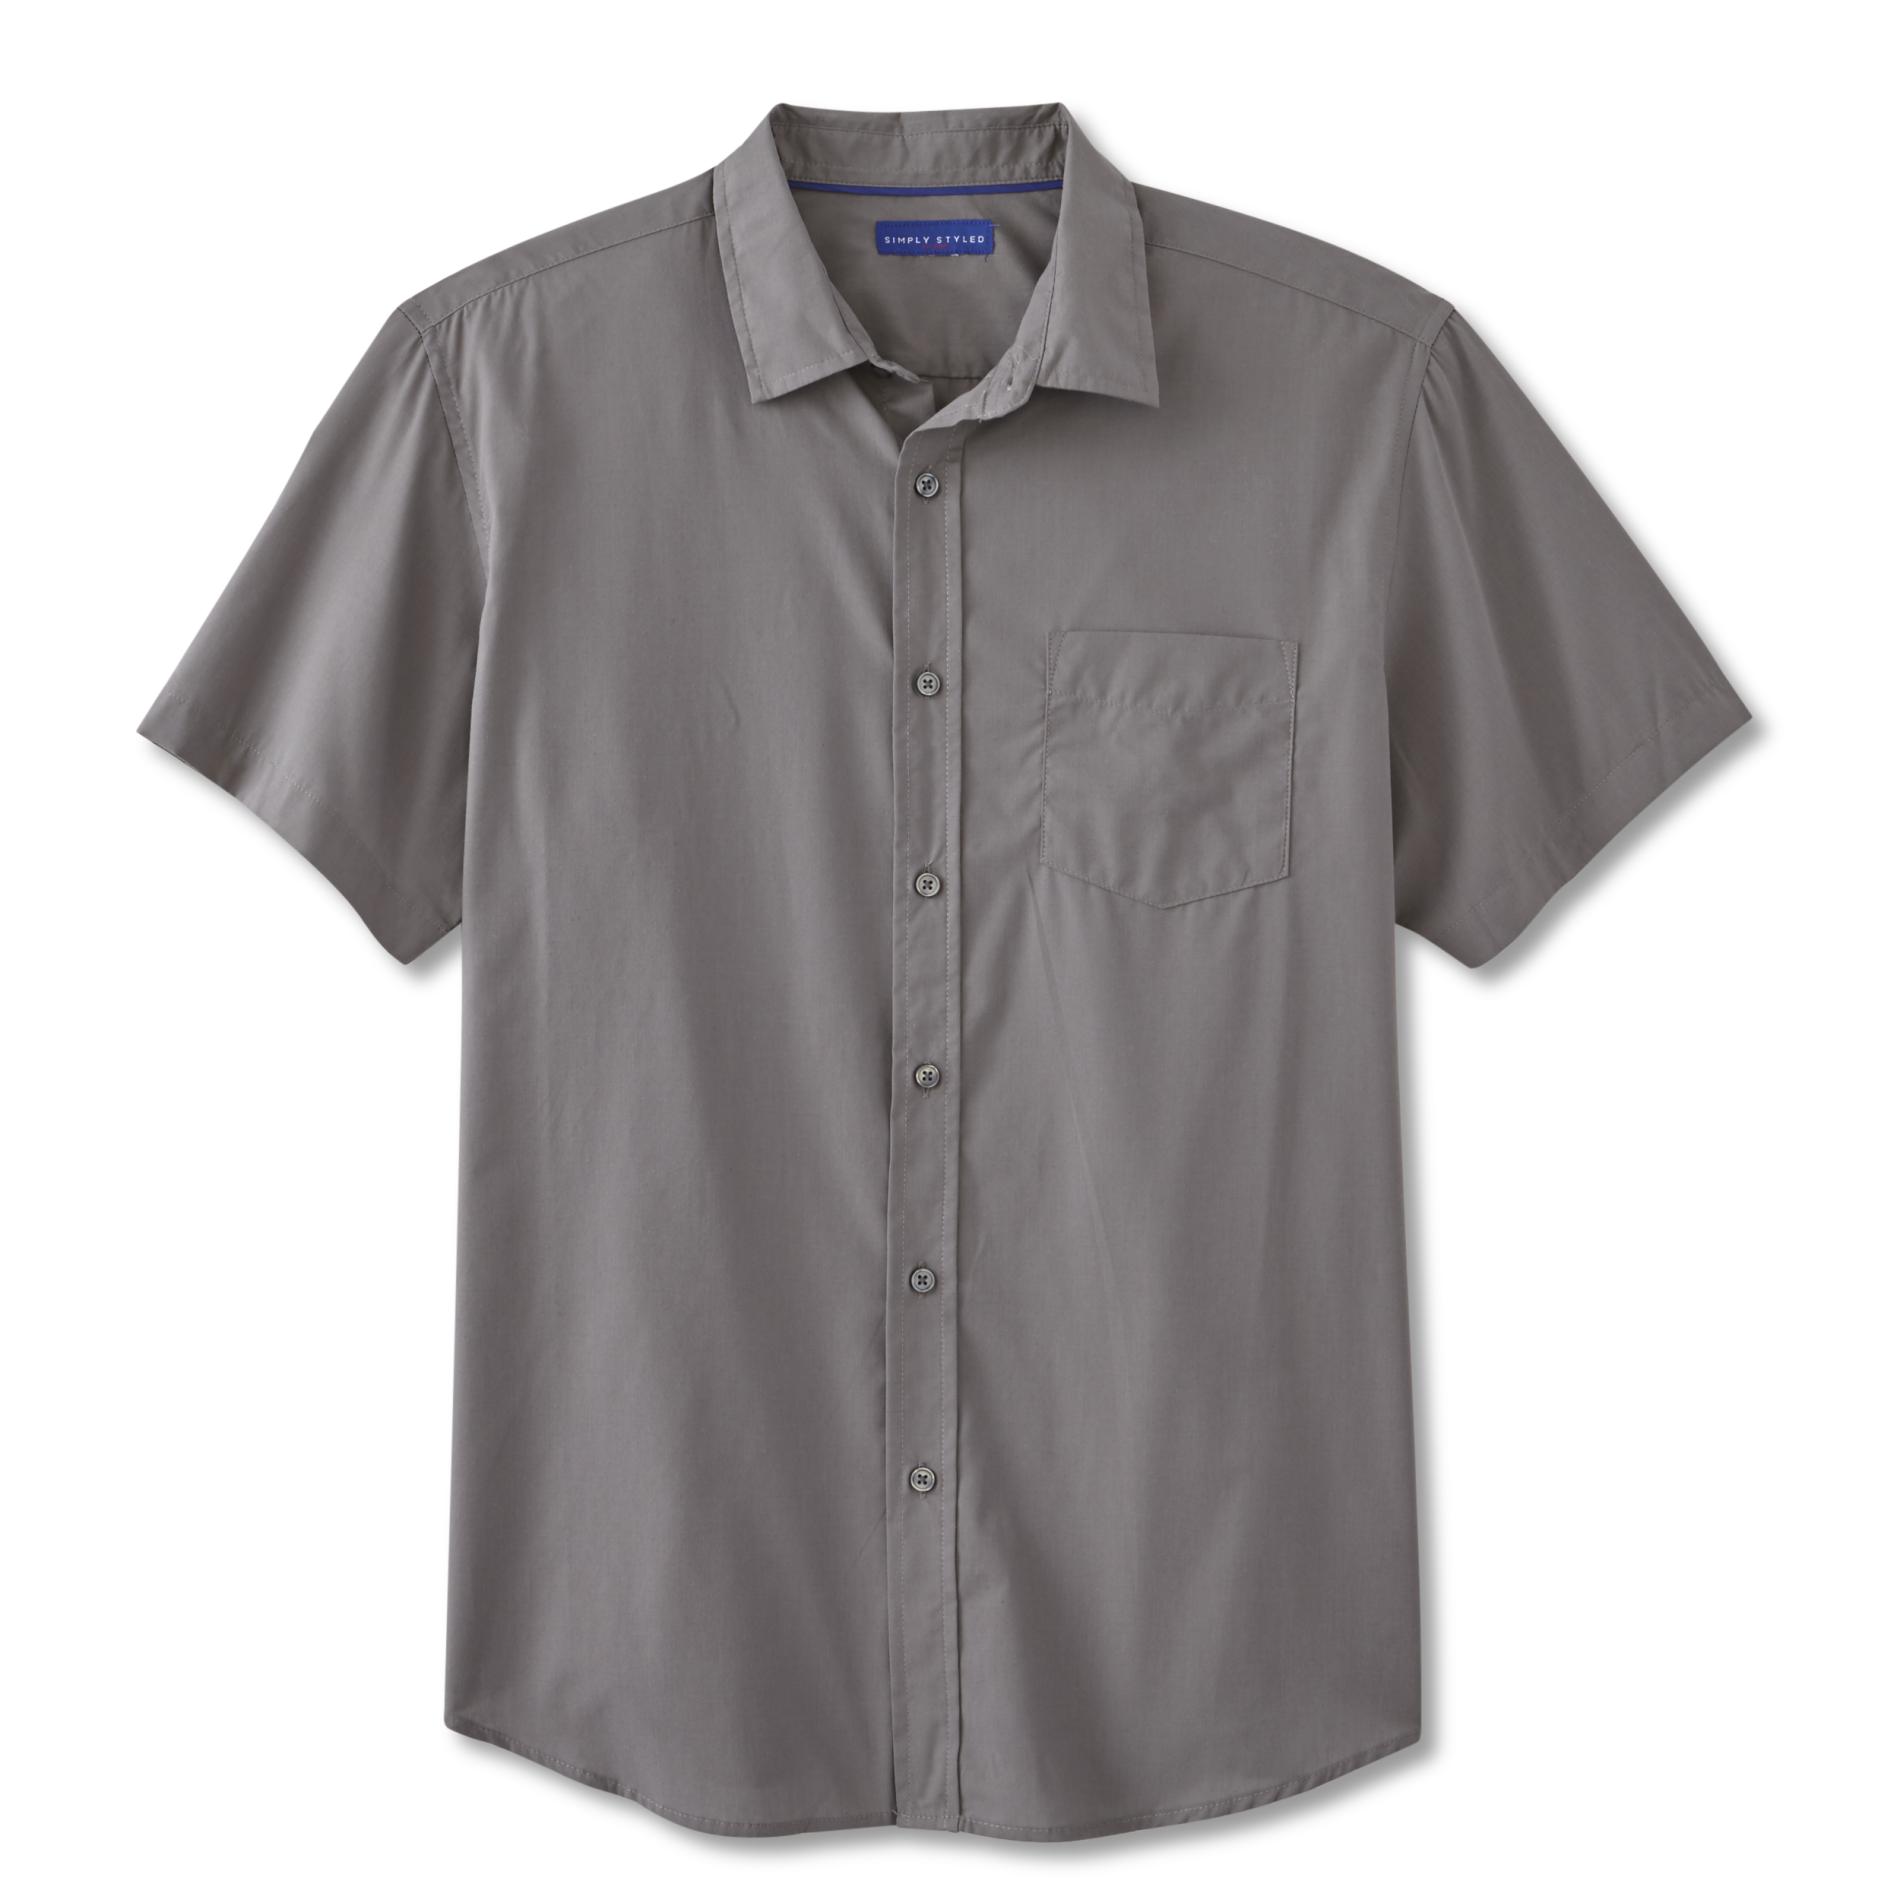 Simply Styled Men's Short-Sleeve Shirt